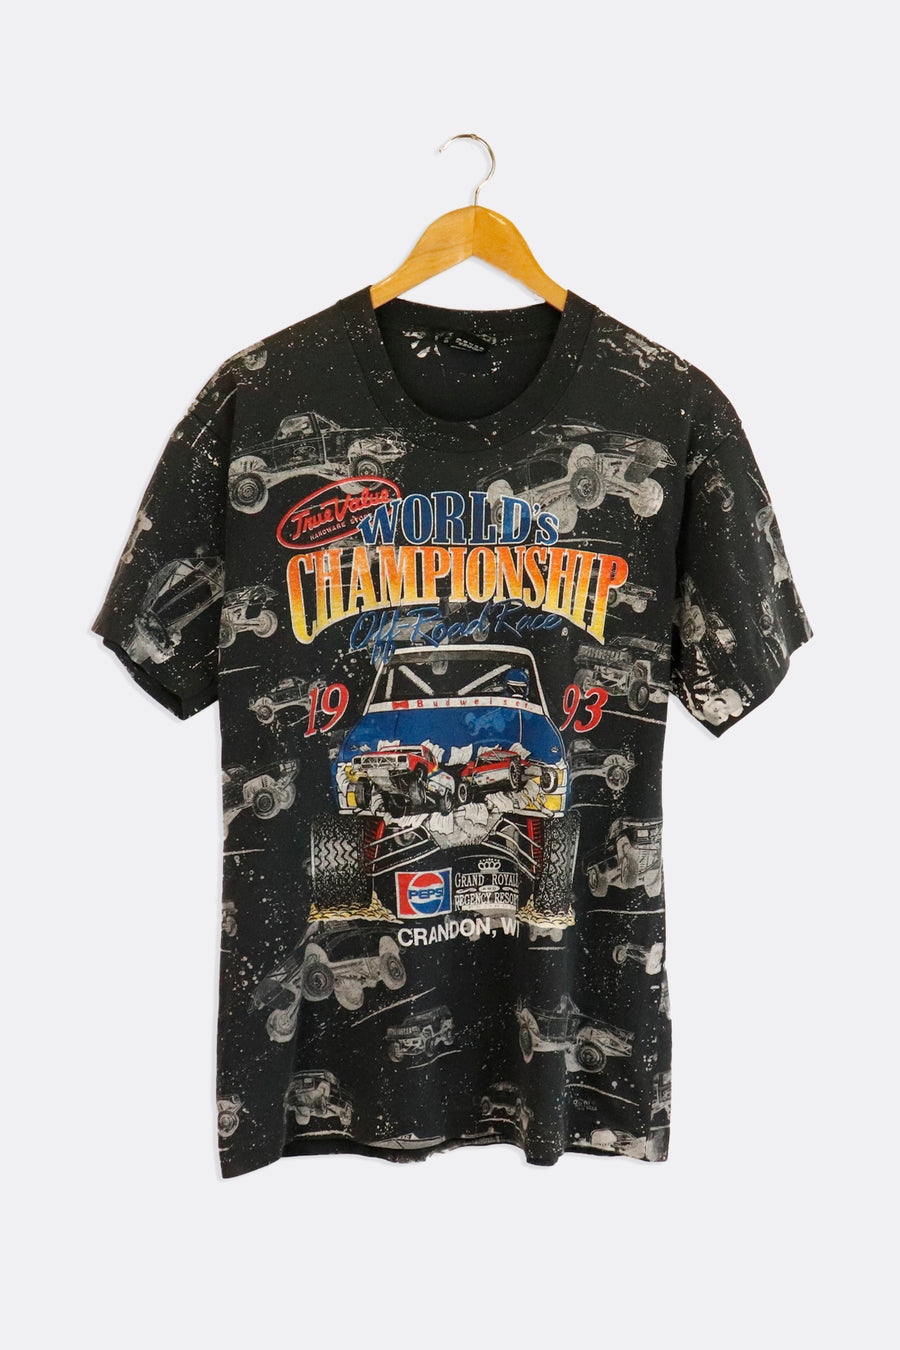 Vintage 1993 World Champion Off Road Race Pepsi Sponsored Trucks All Over Pattern T Shirt Sz L